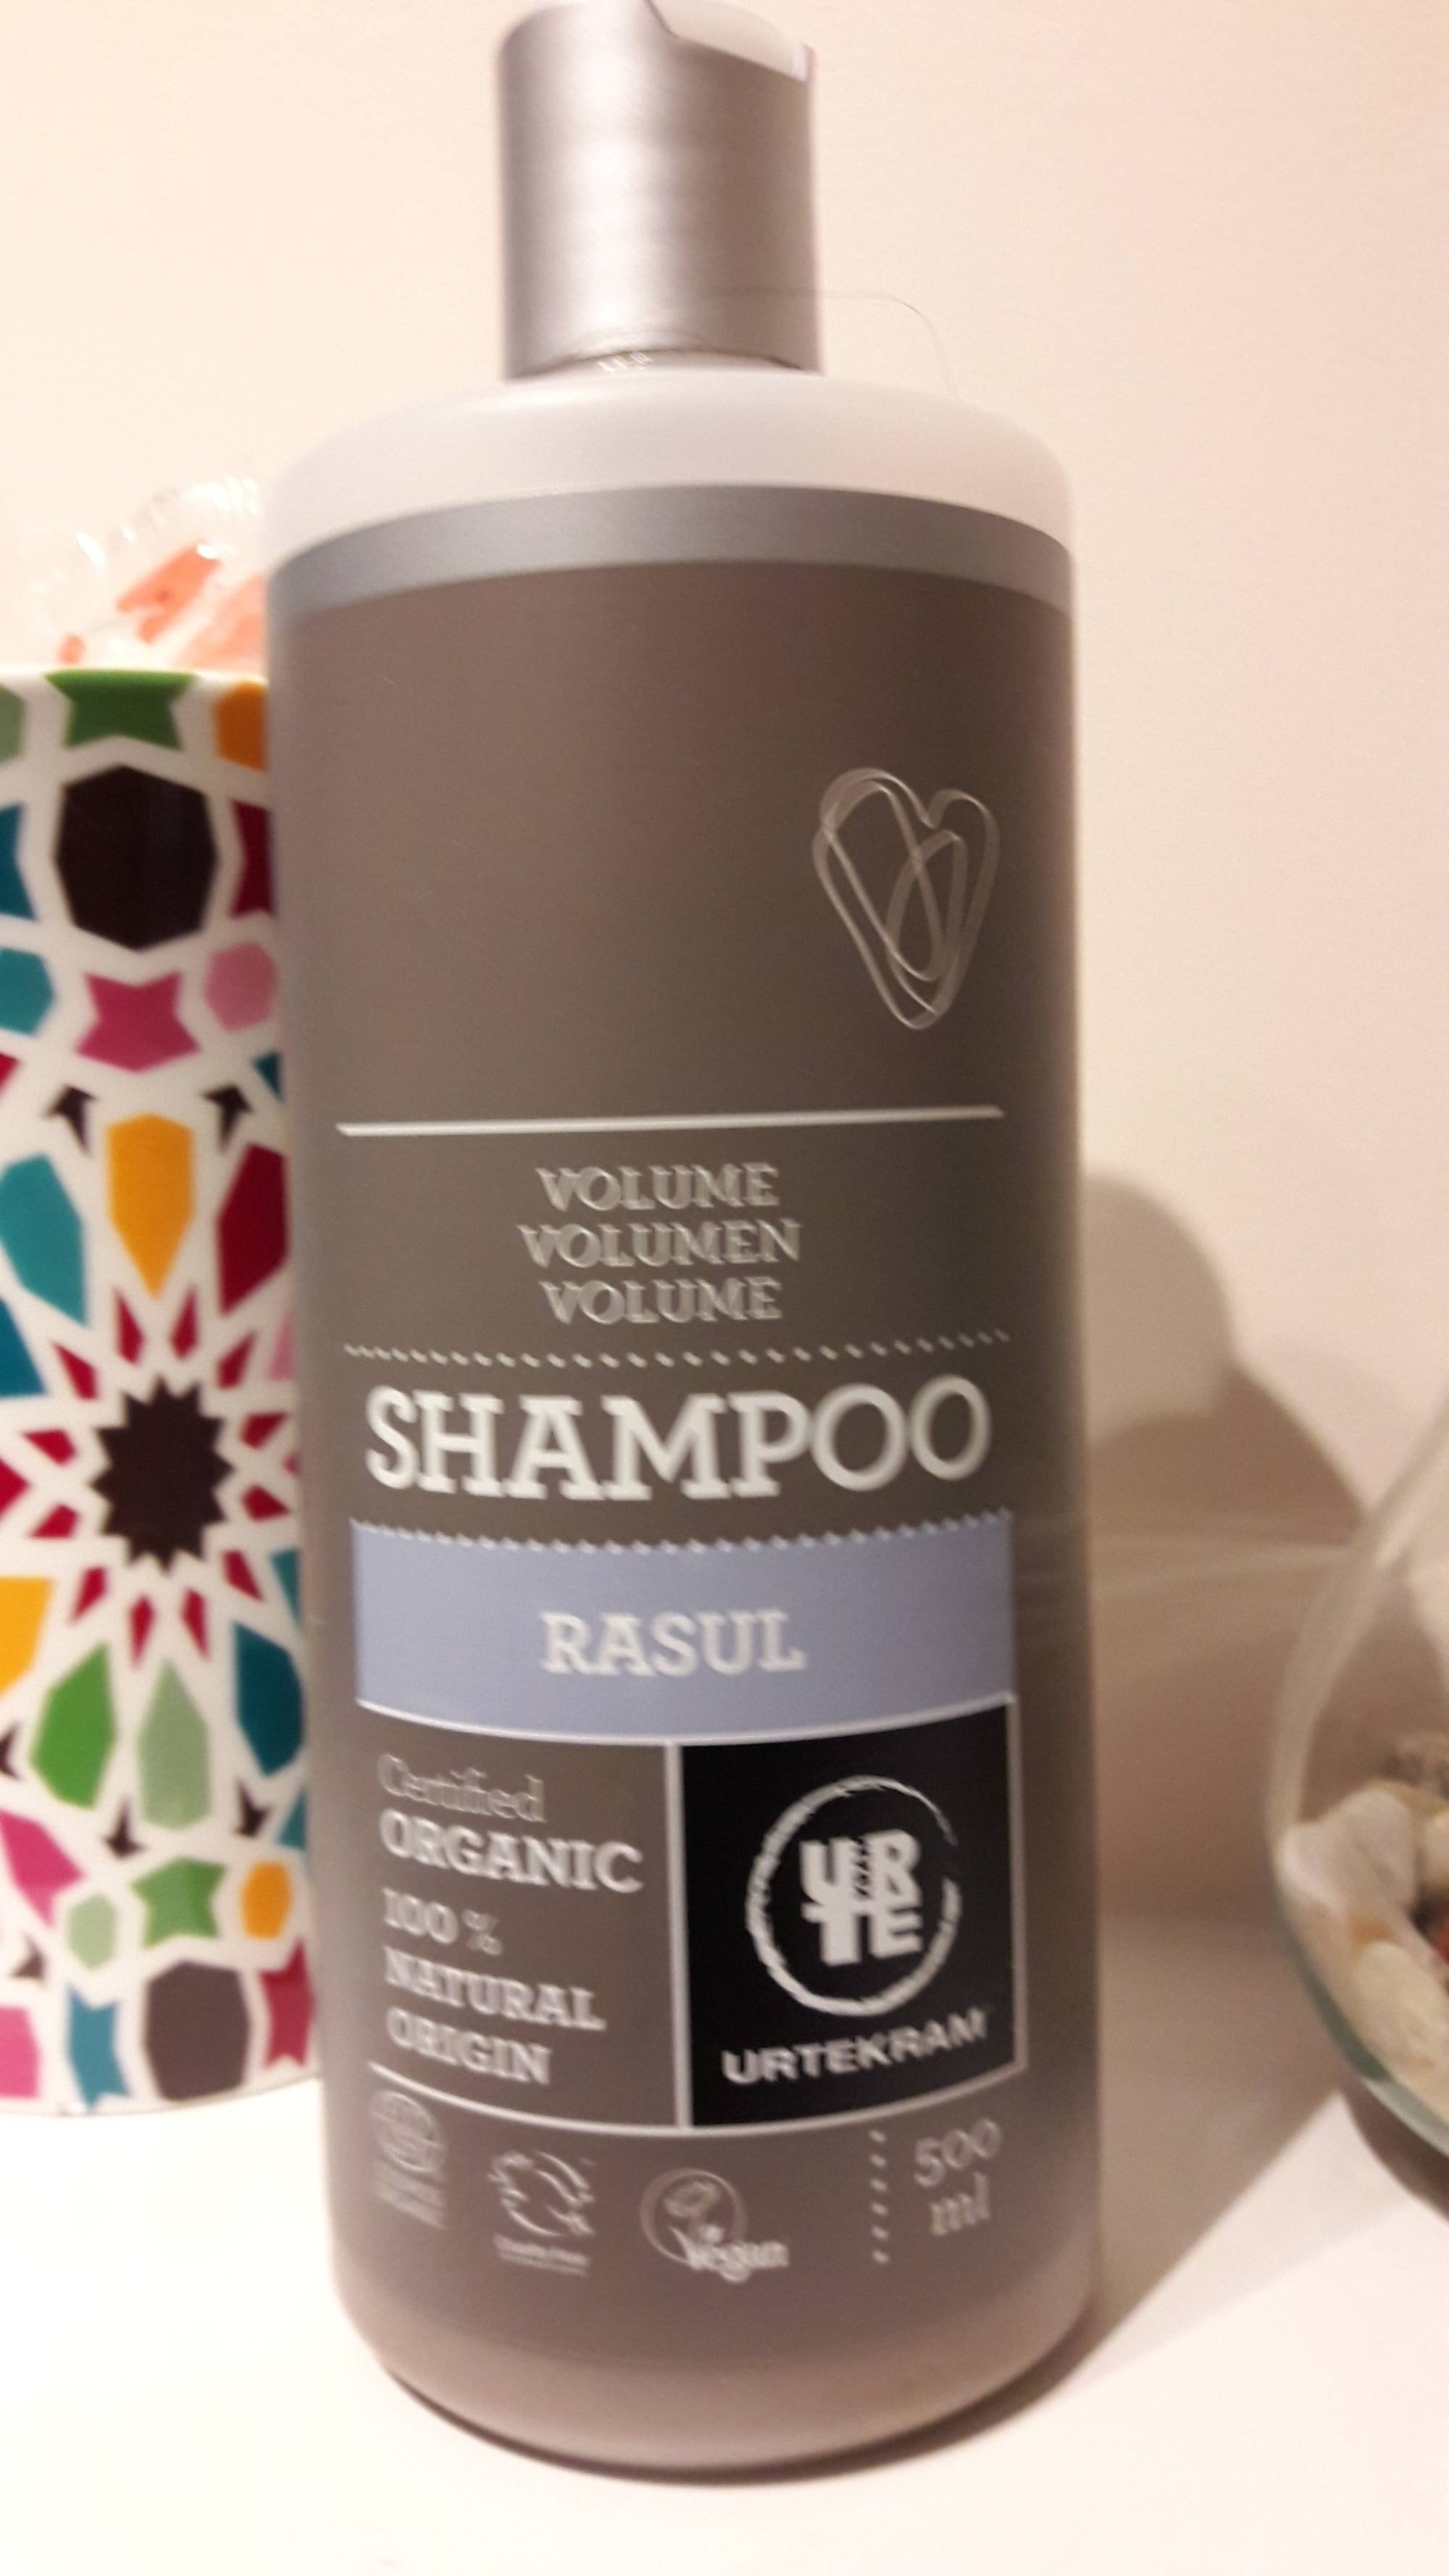 URTEKRAM - Shampoo rasul volume